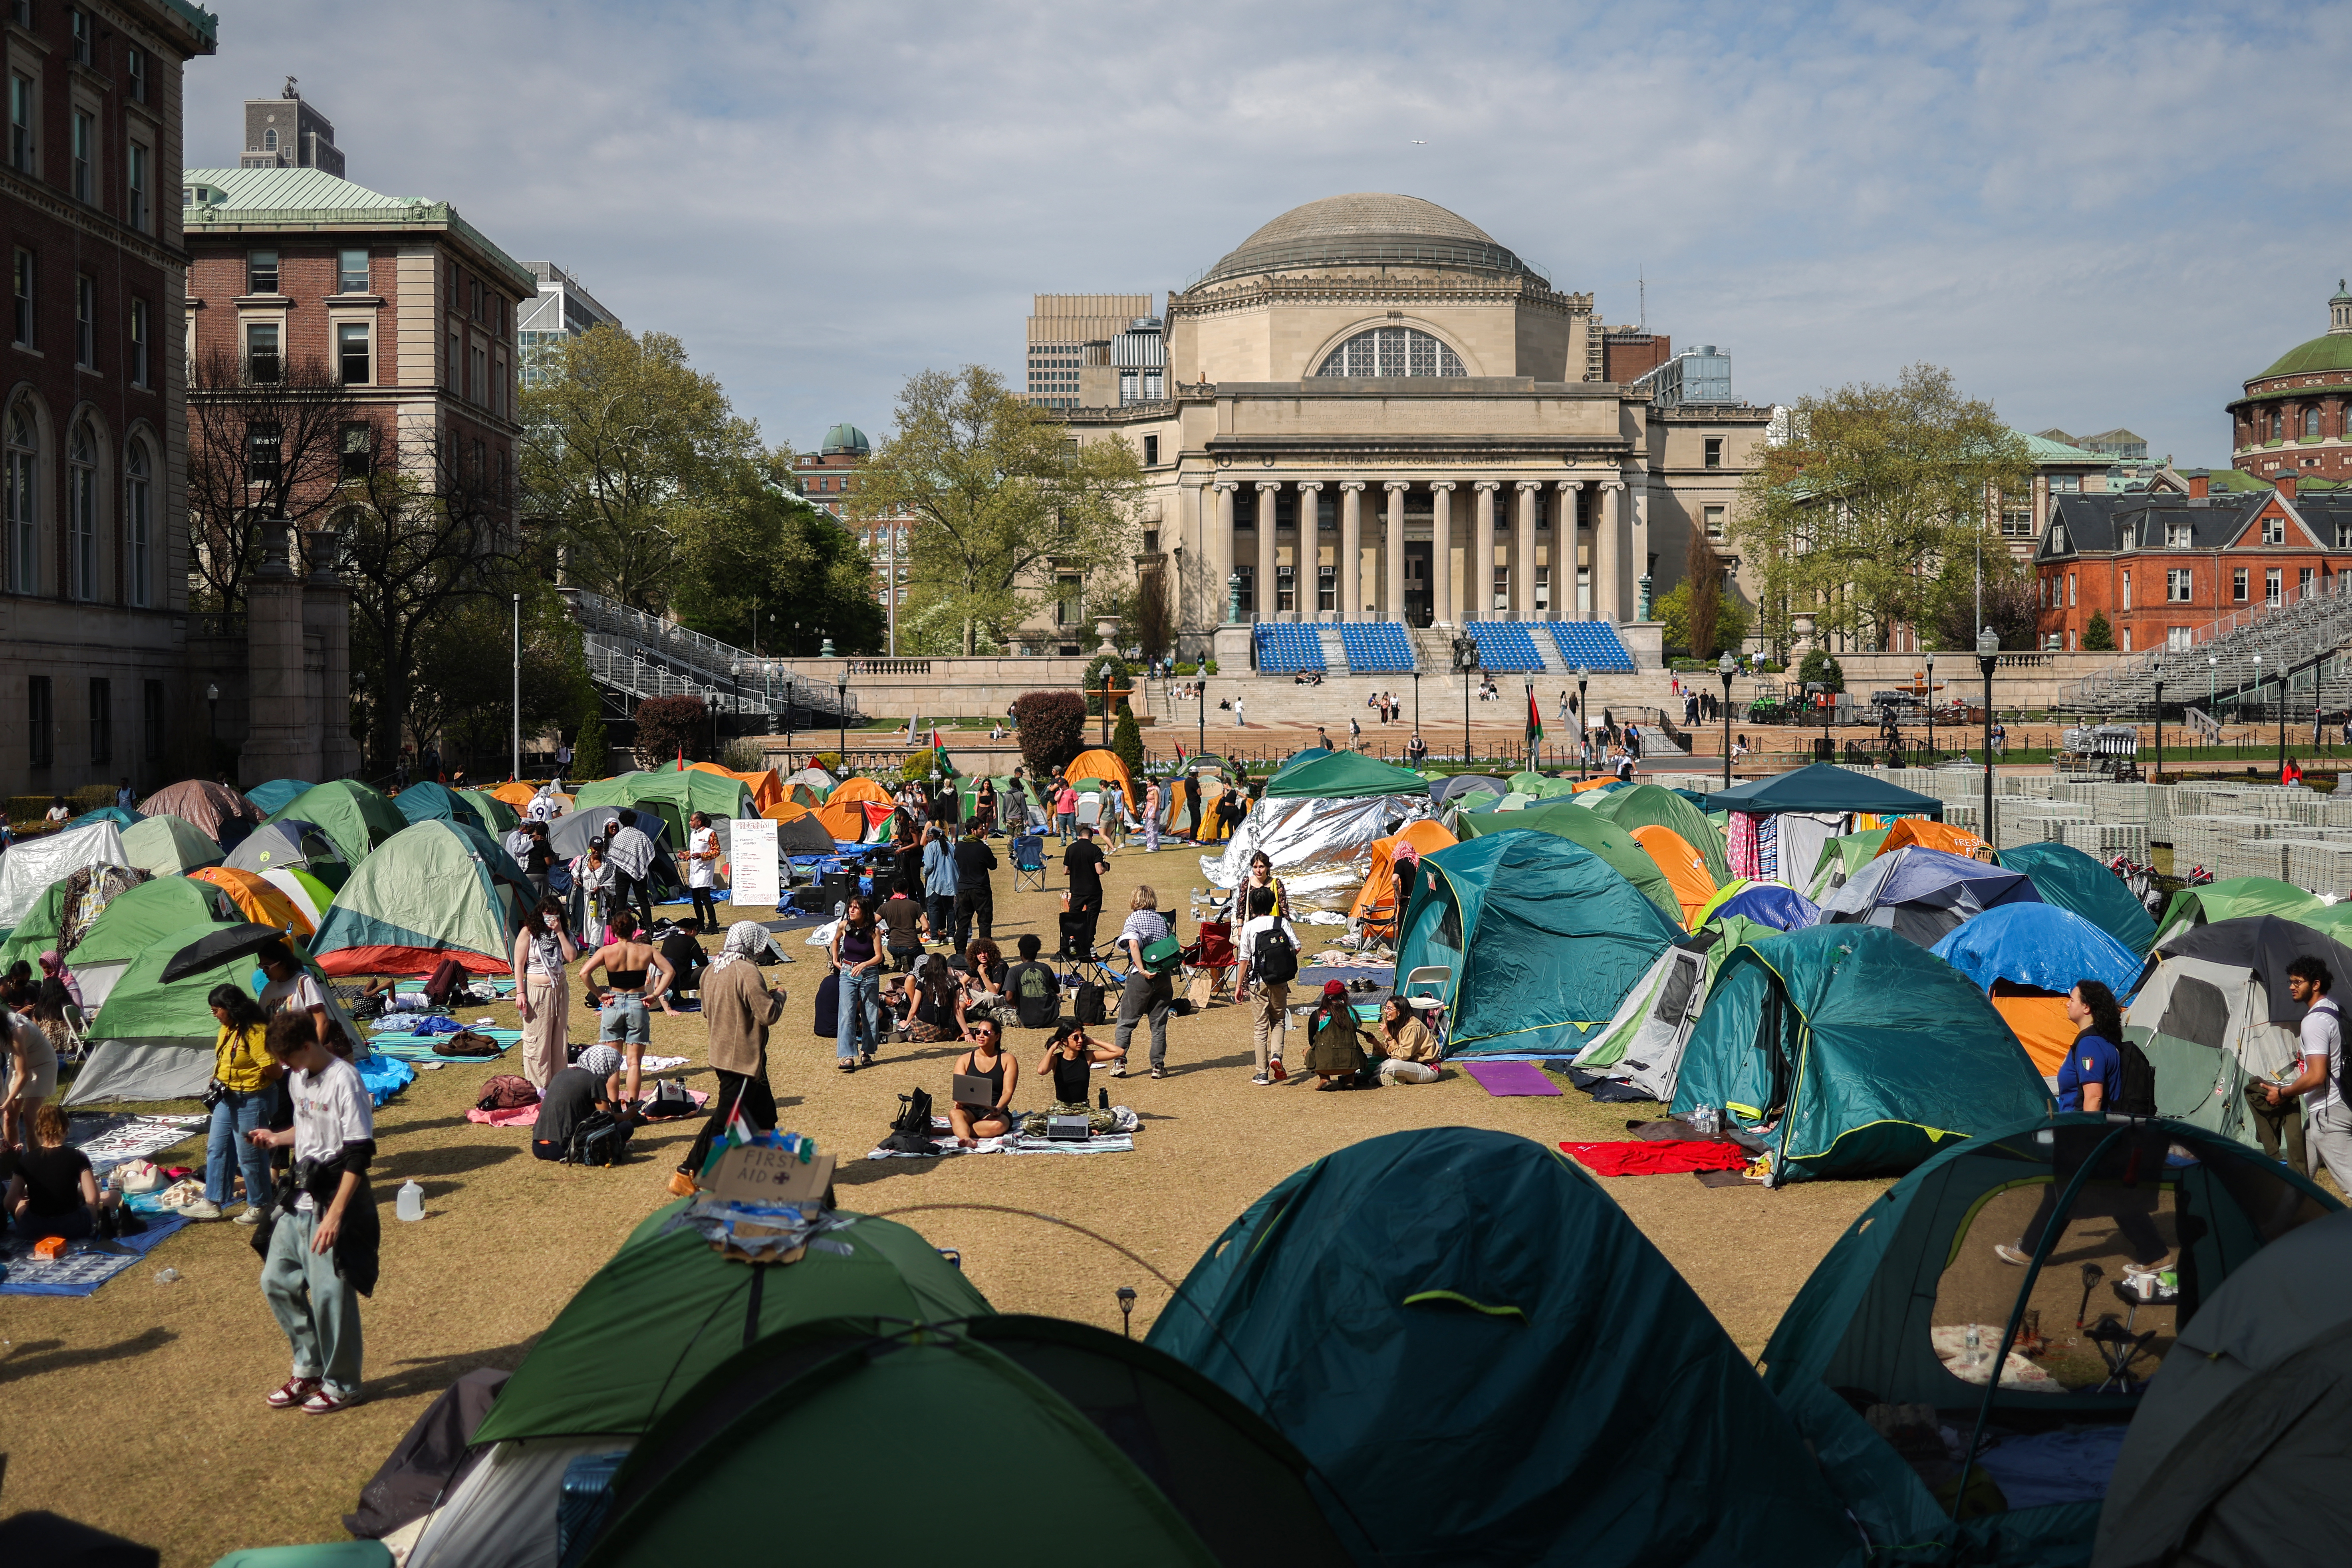 Columbia University's ultimatum: disperse by 2 p.m. or face suspension